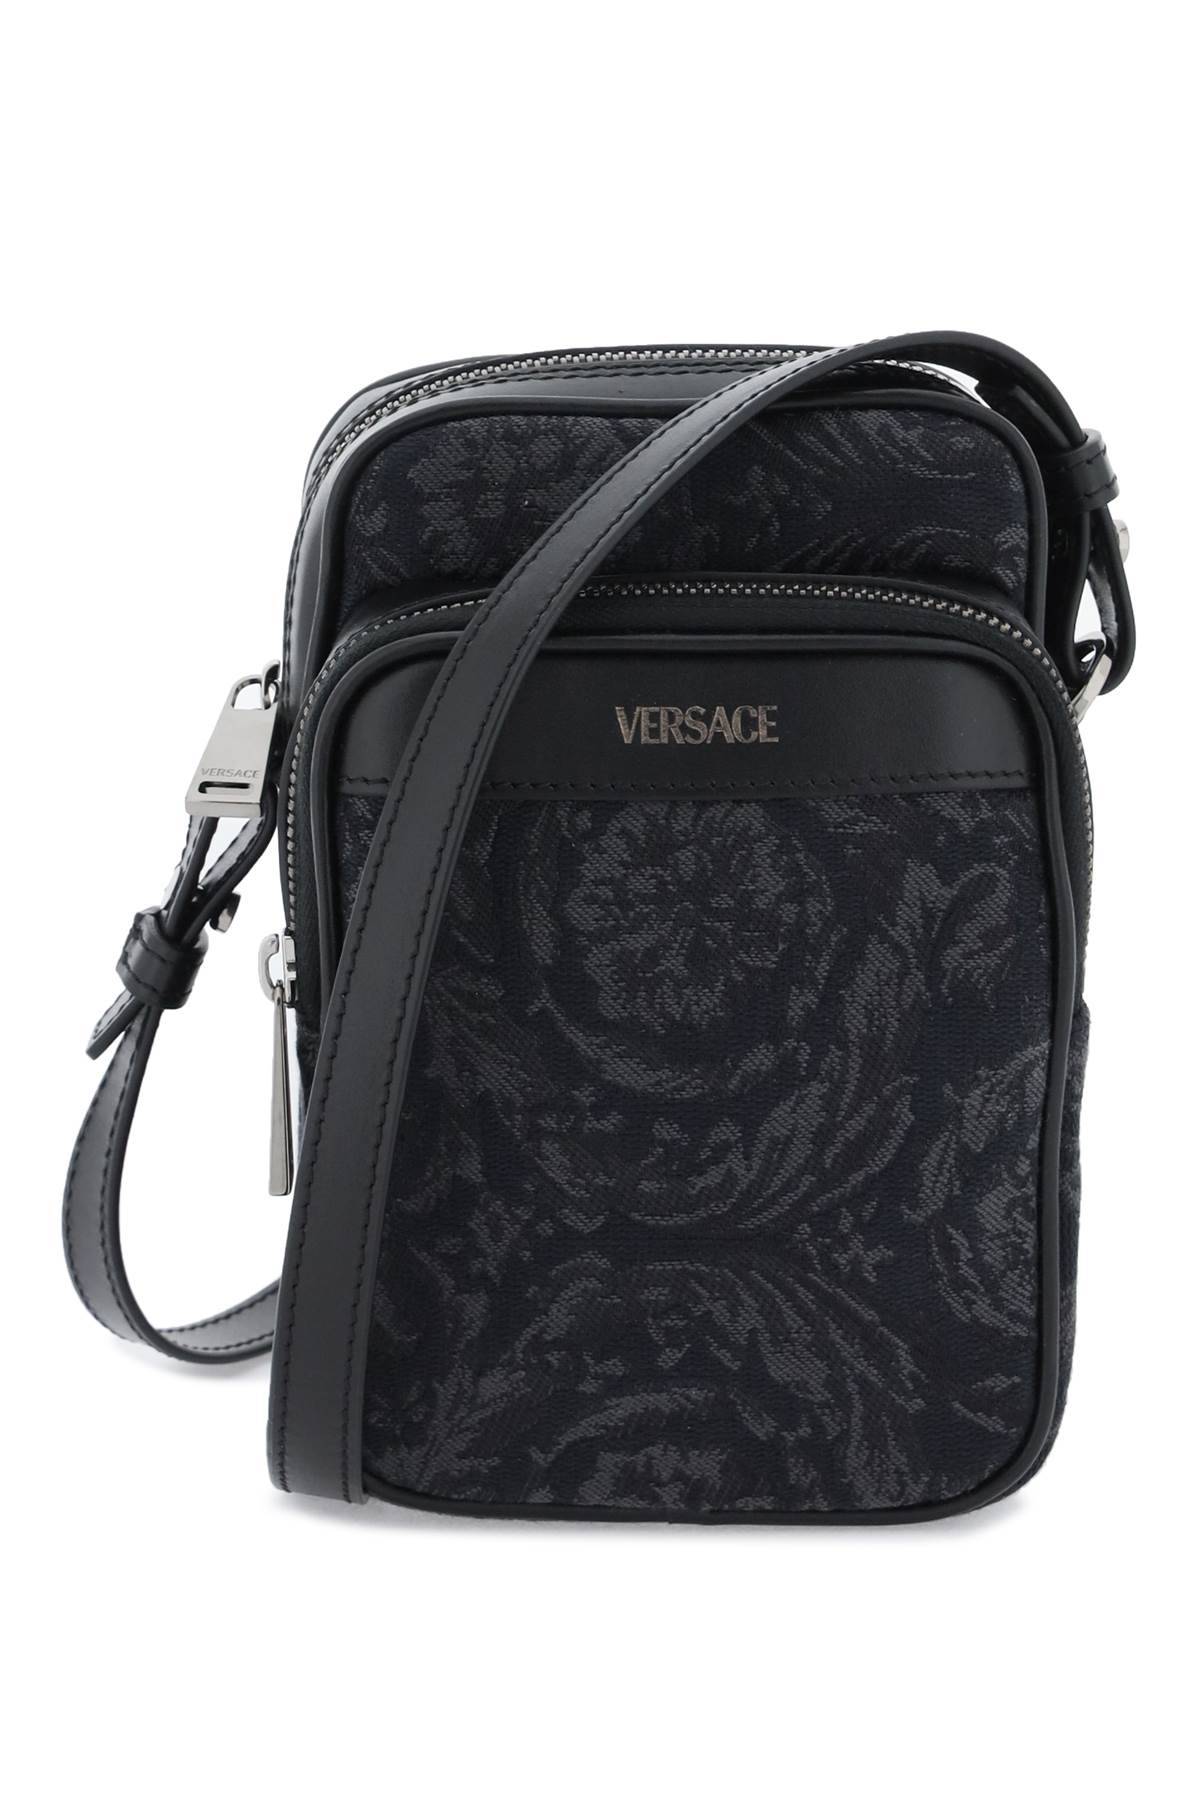 Versace VERSACE athena barocco crossbody bag